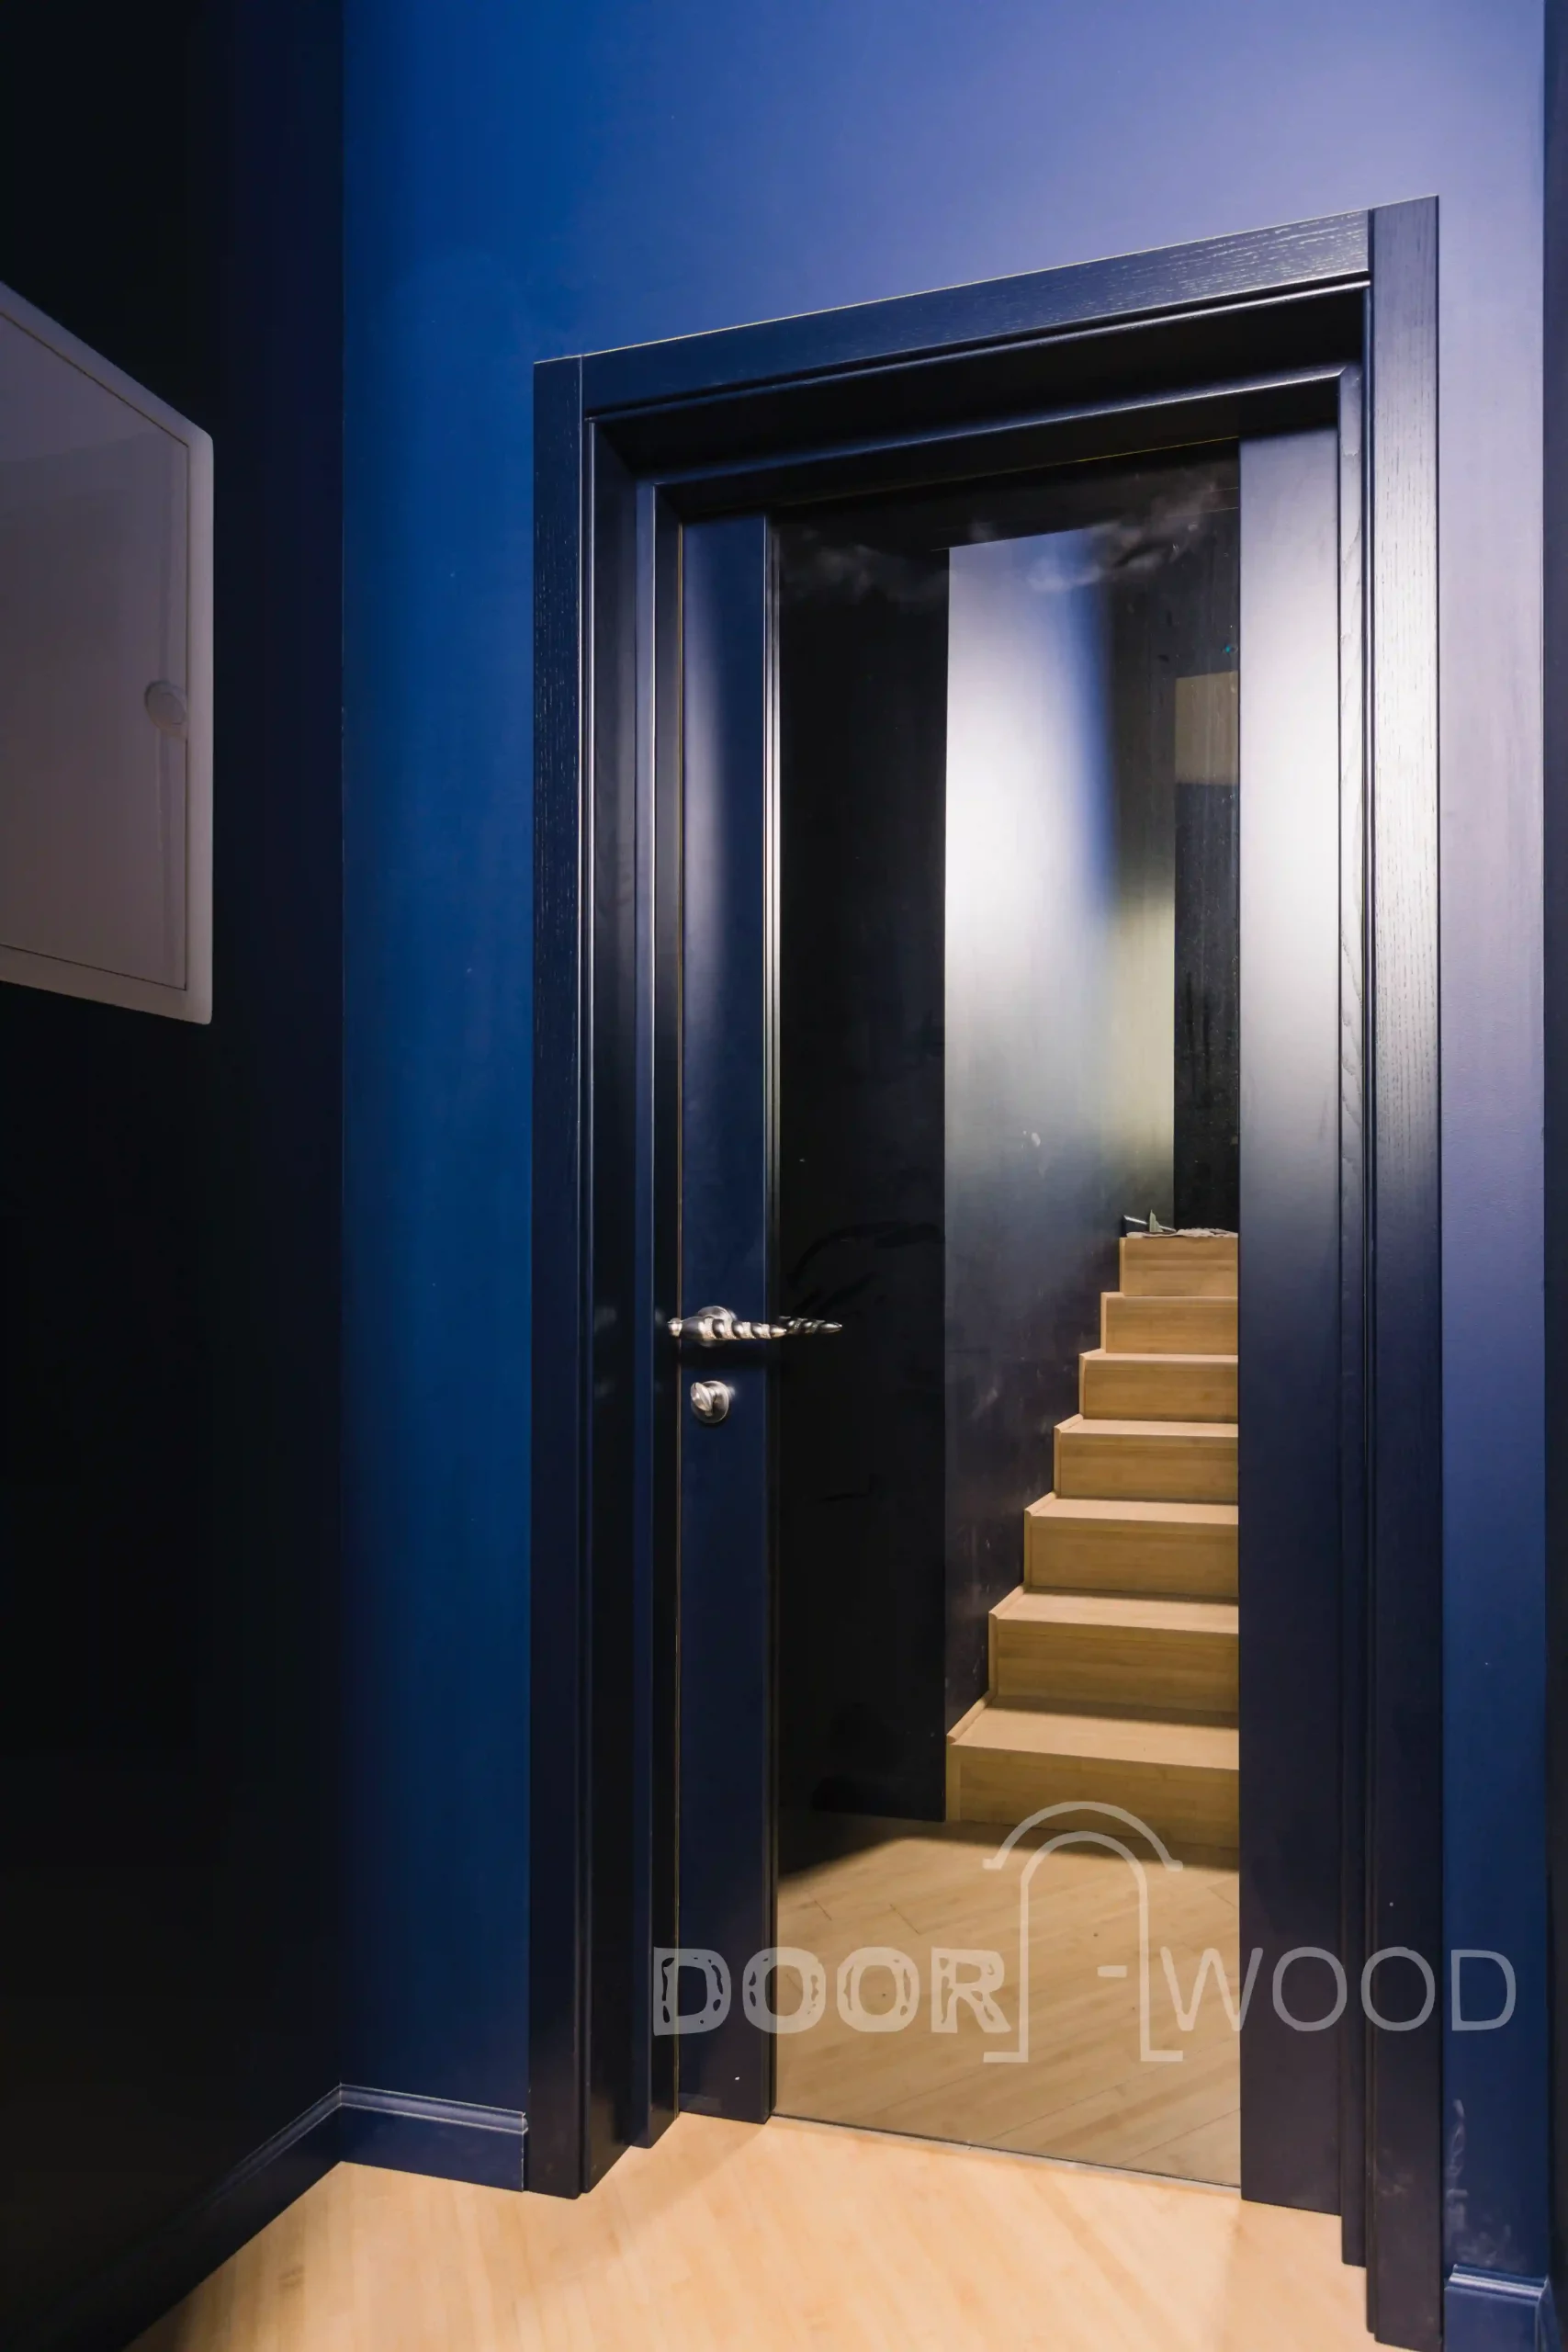 Radius interior doors and railing made of maple ash doors RAL blue painting